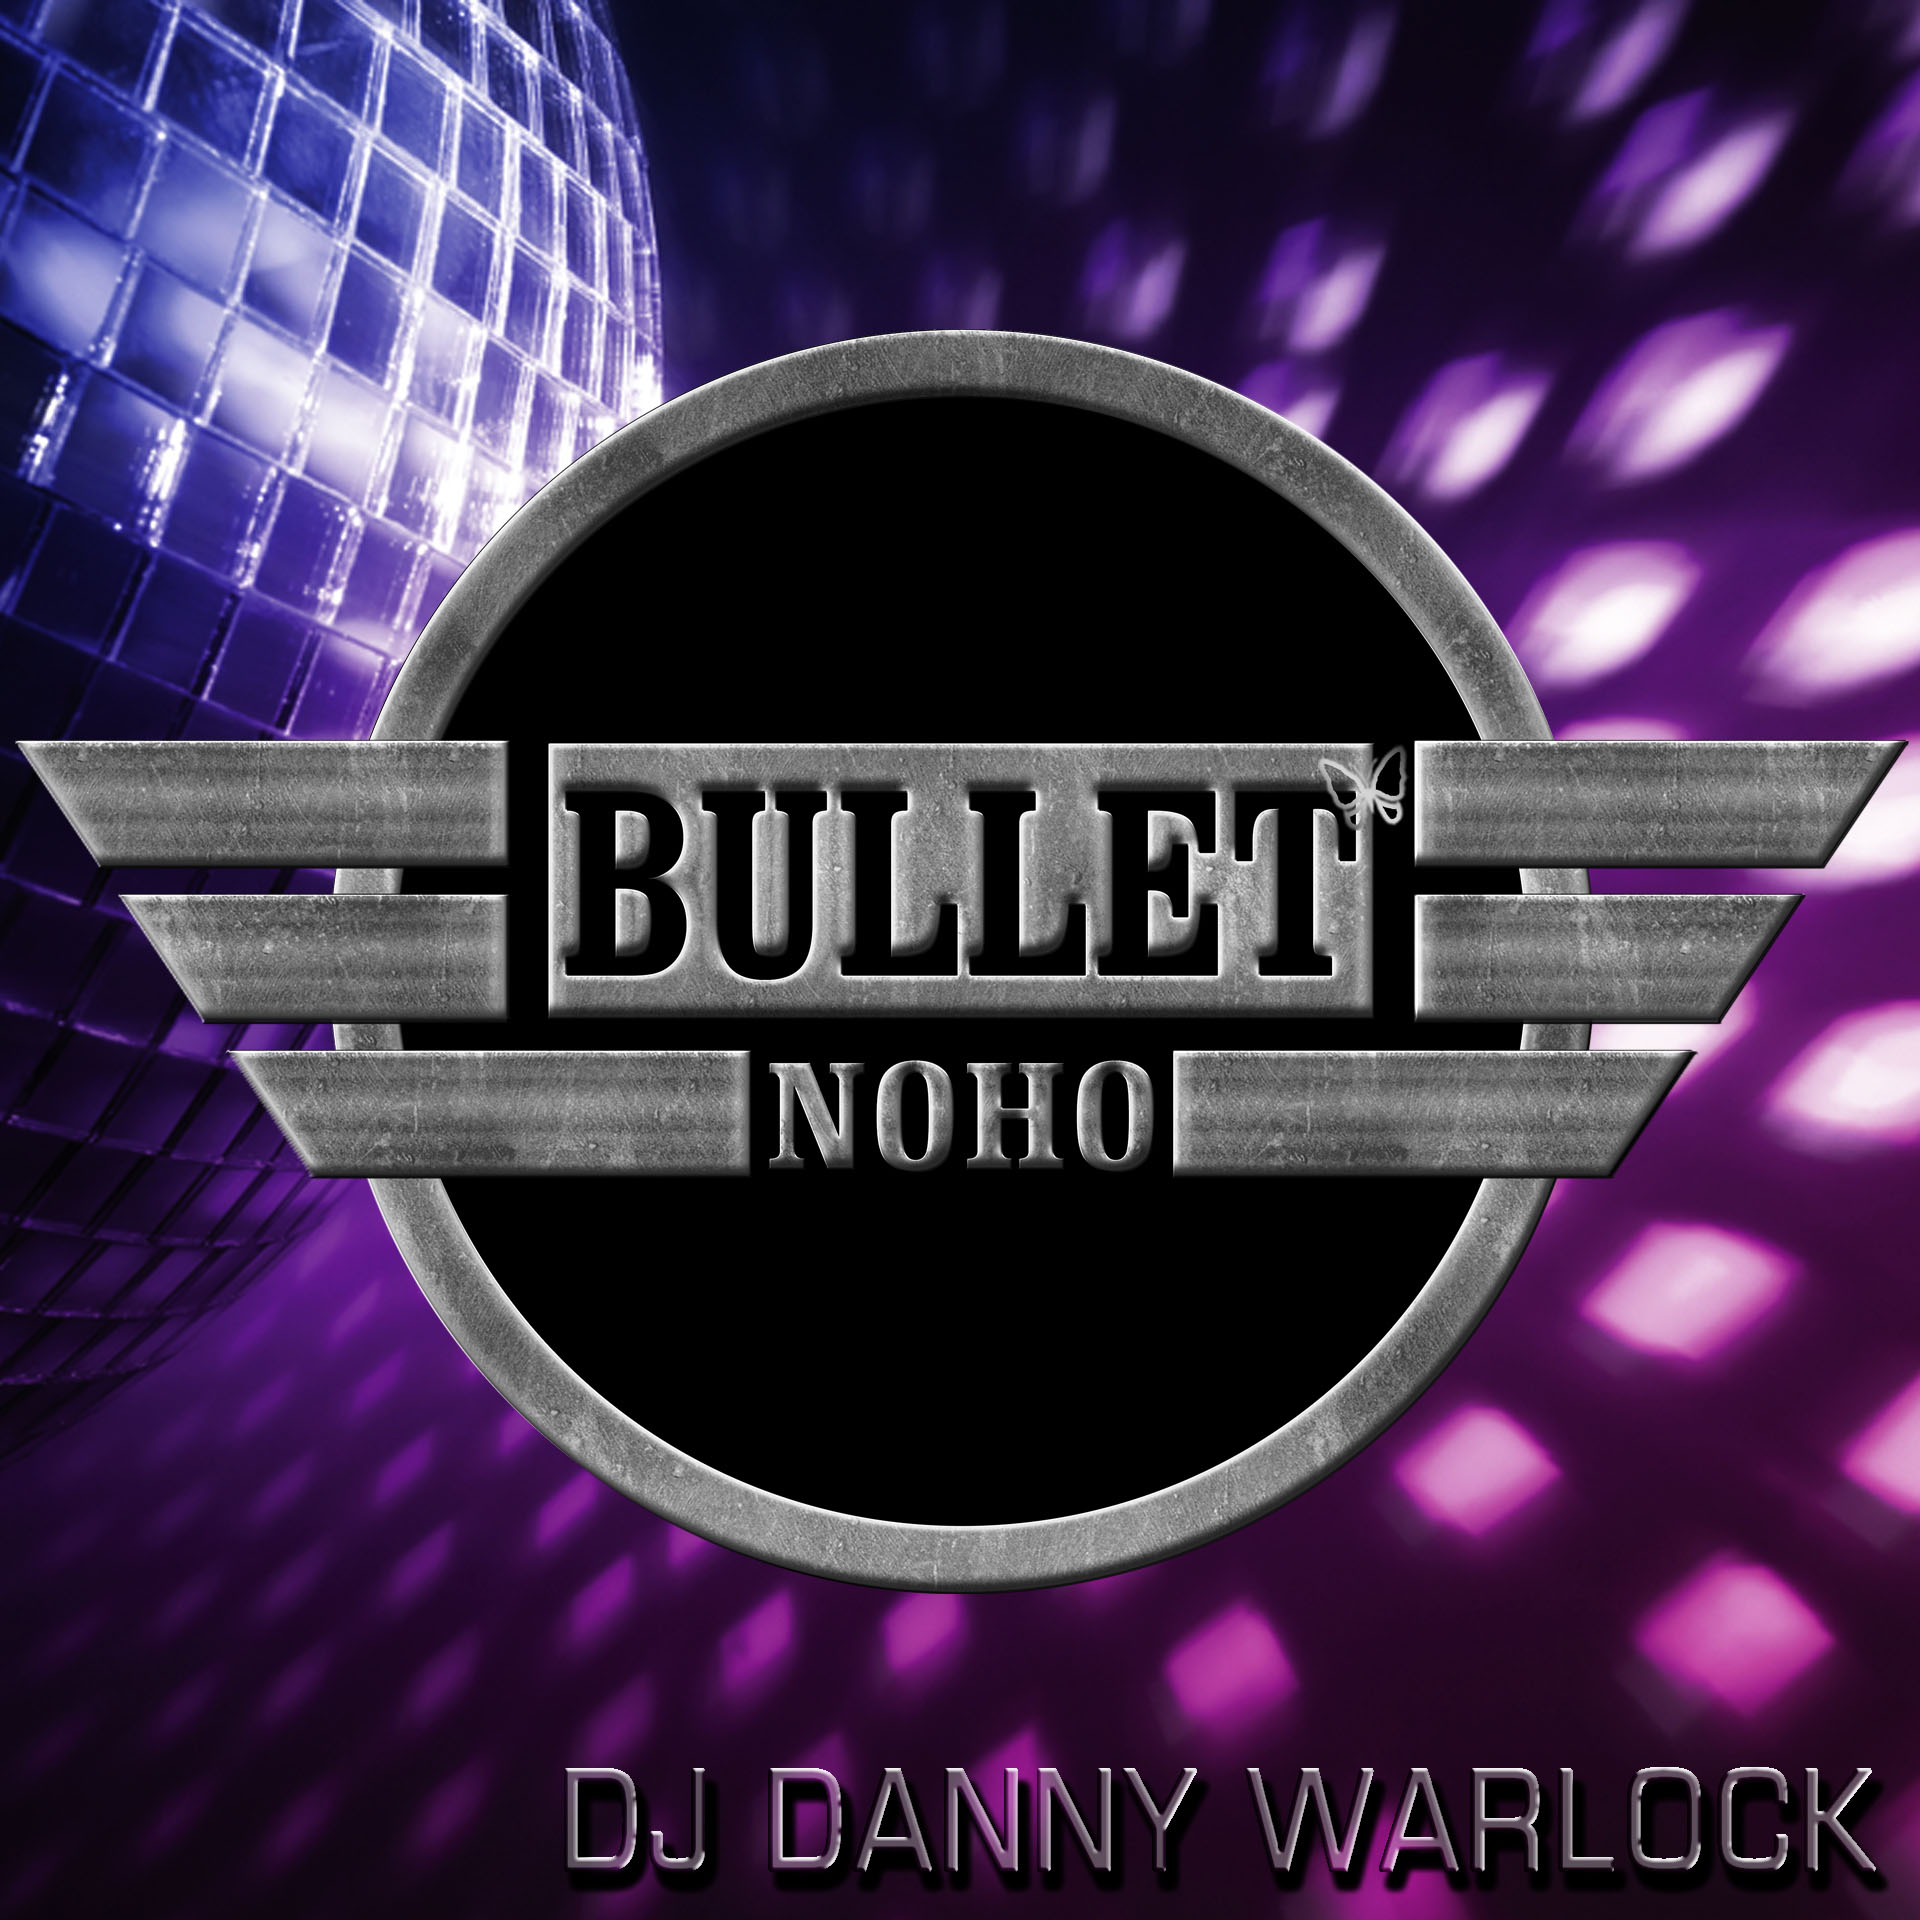 DJ DANNY WARLOCK: Saturday, June 4, 2022 from 8:00 PM to 2:00 AM